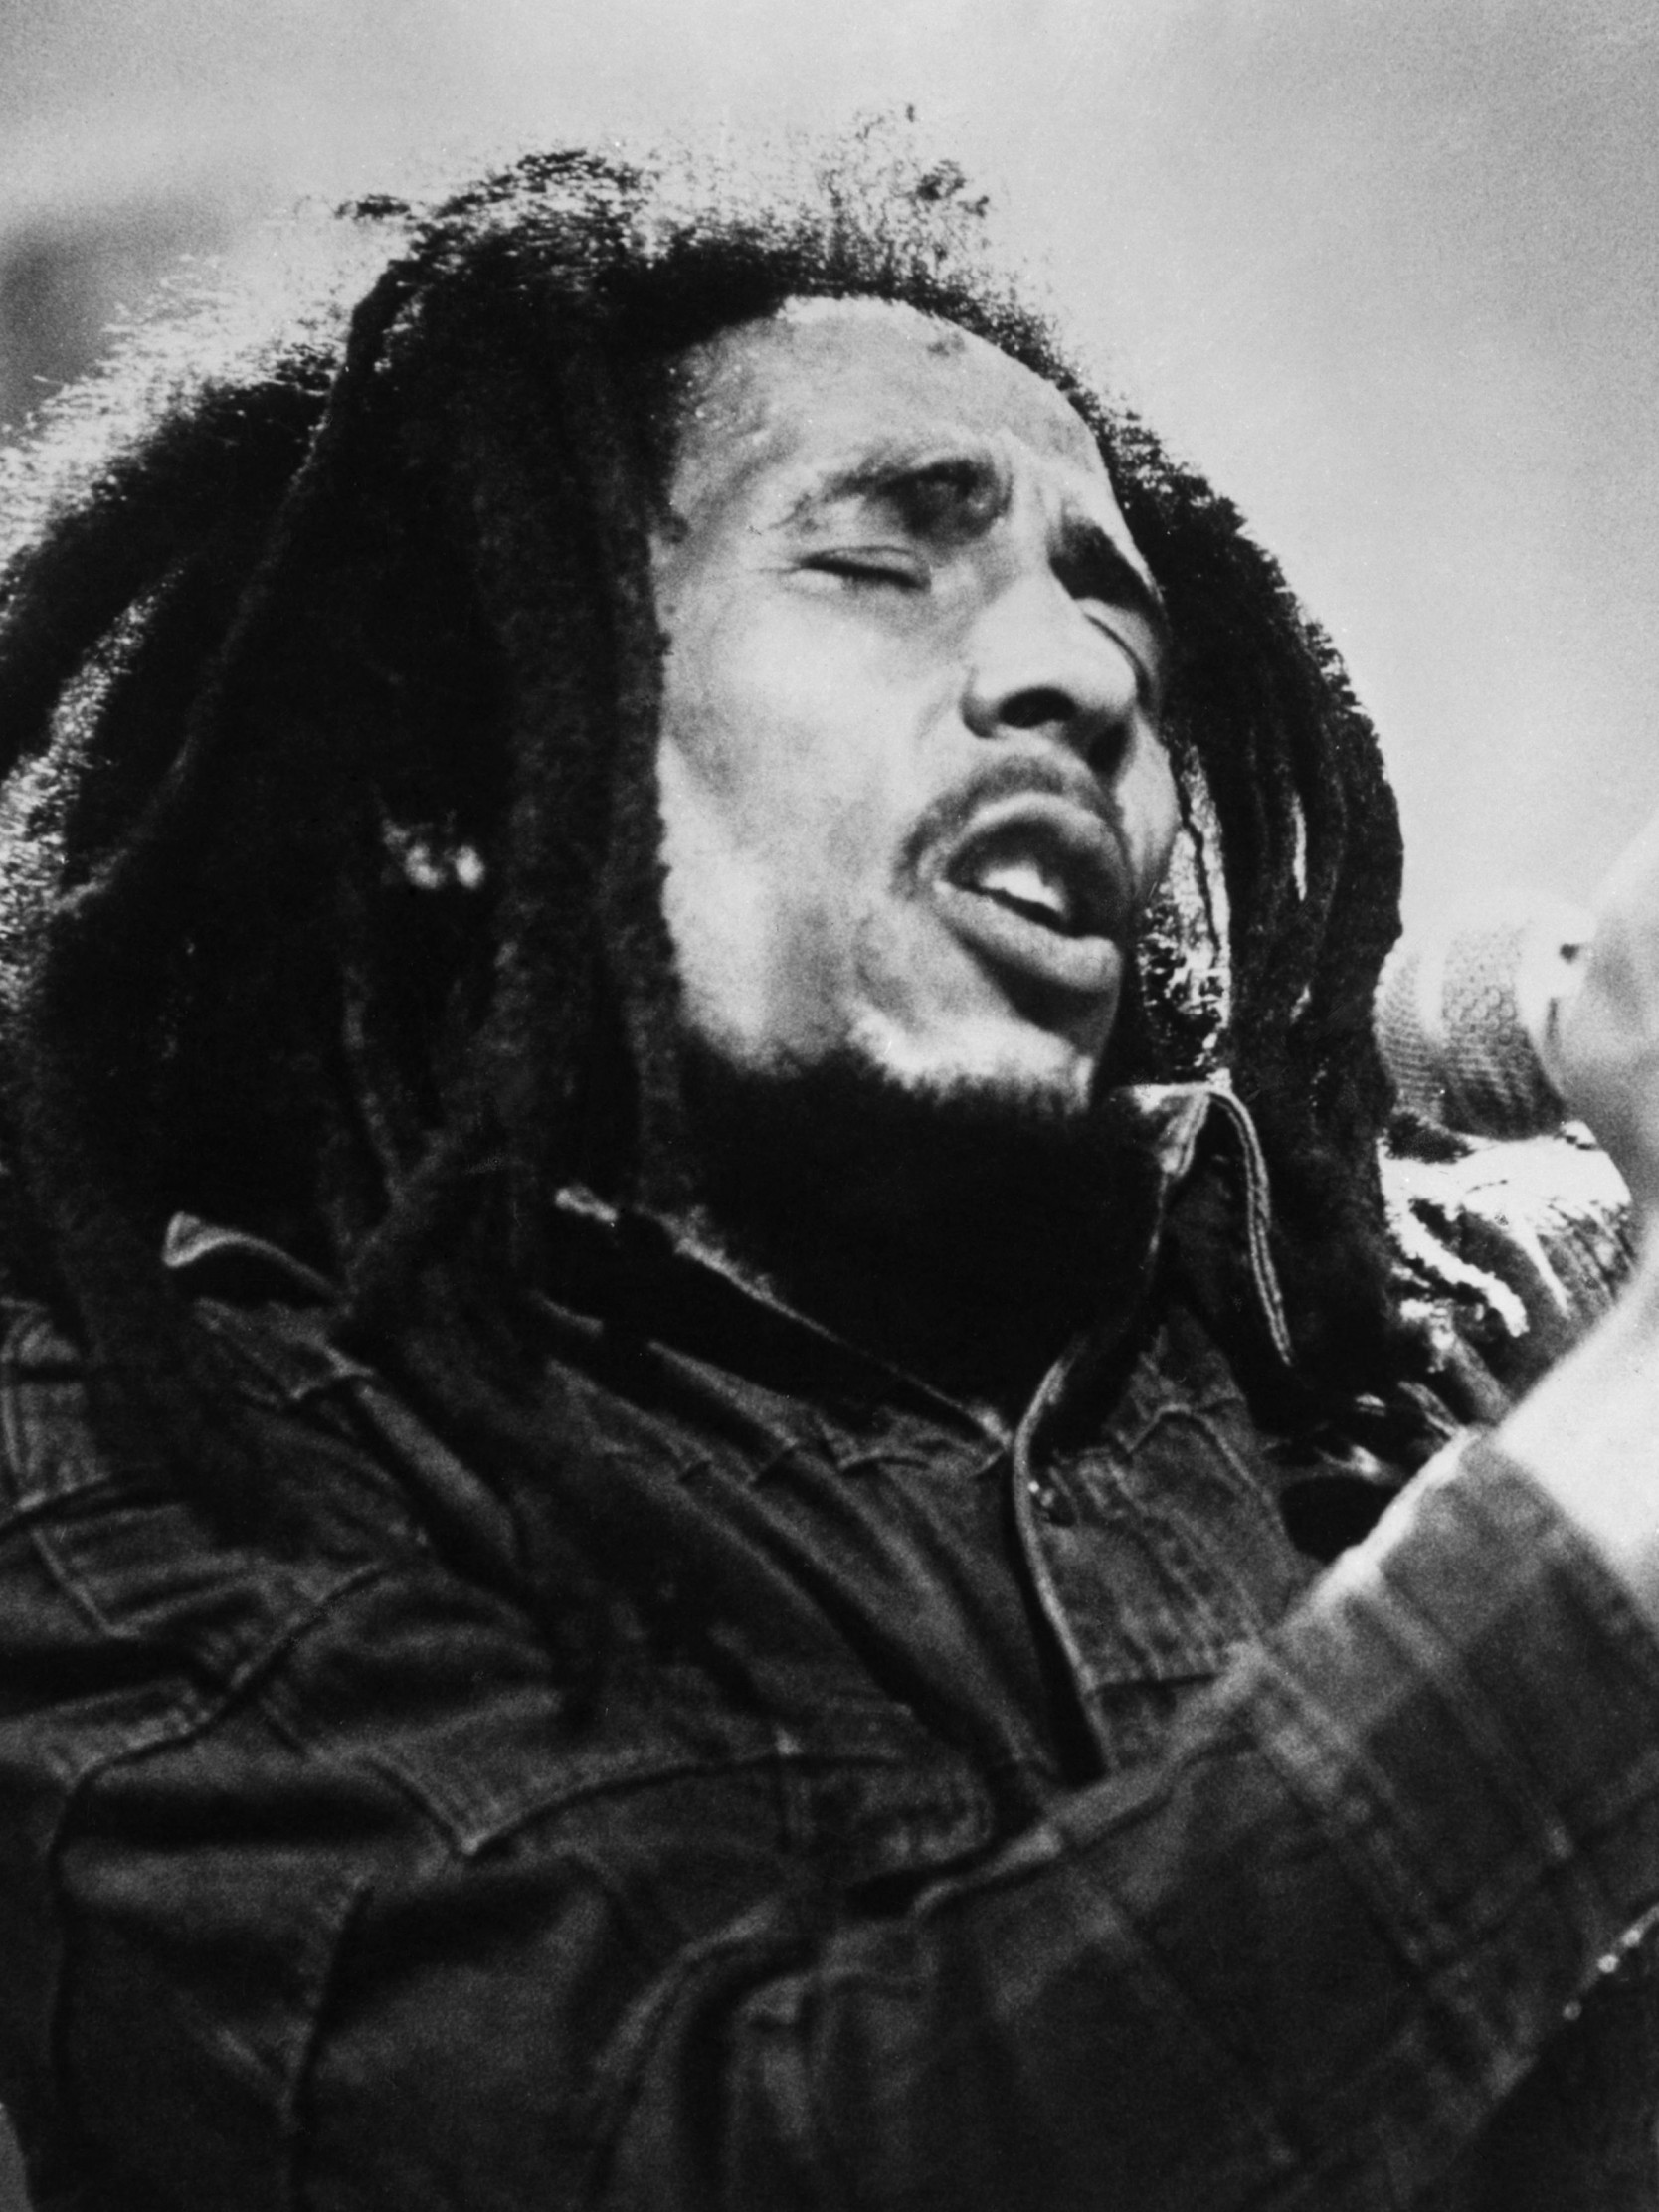 Download Bob Marley 2018, Bob Marley 24/02 Wallpaper - Bob Marley , HD Wallpaper & Backgrounds